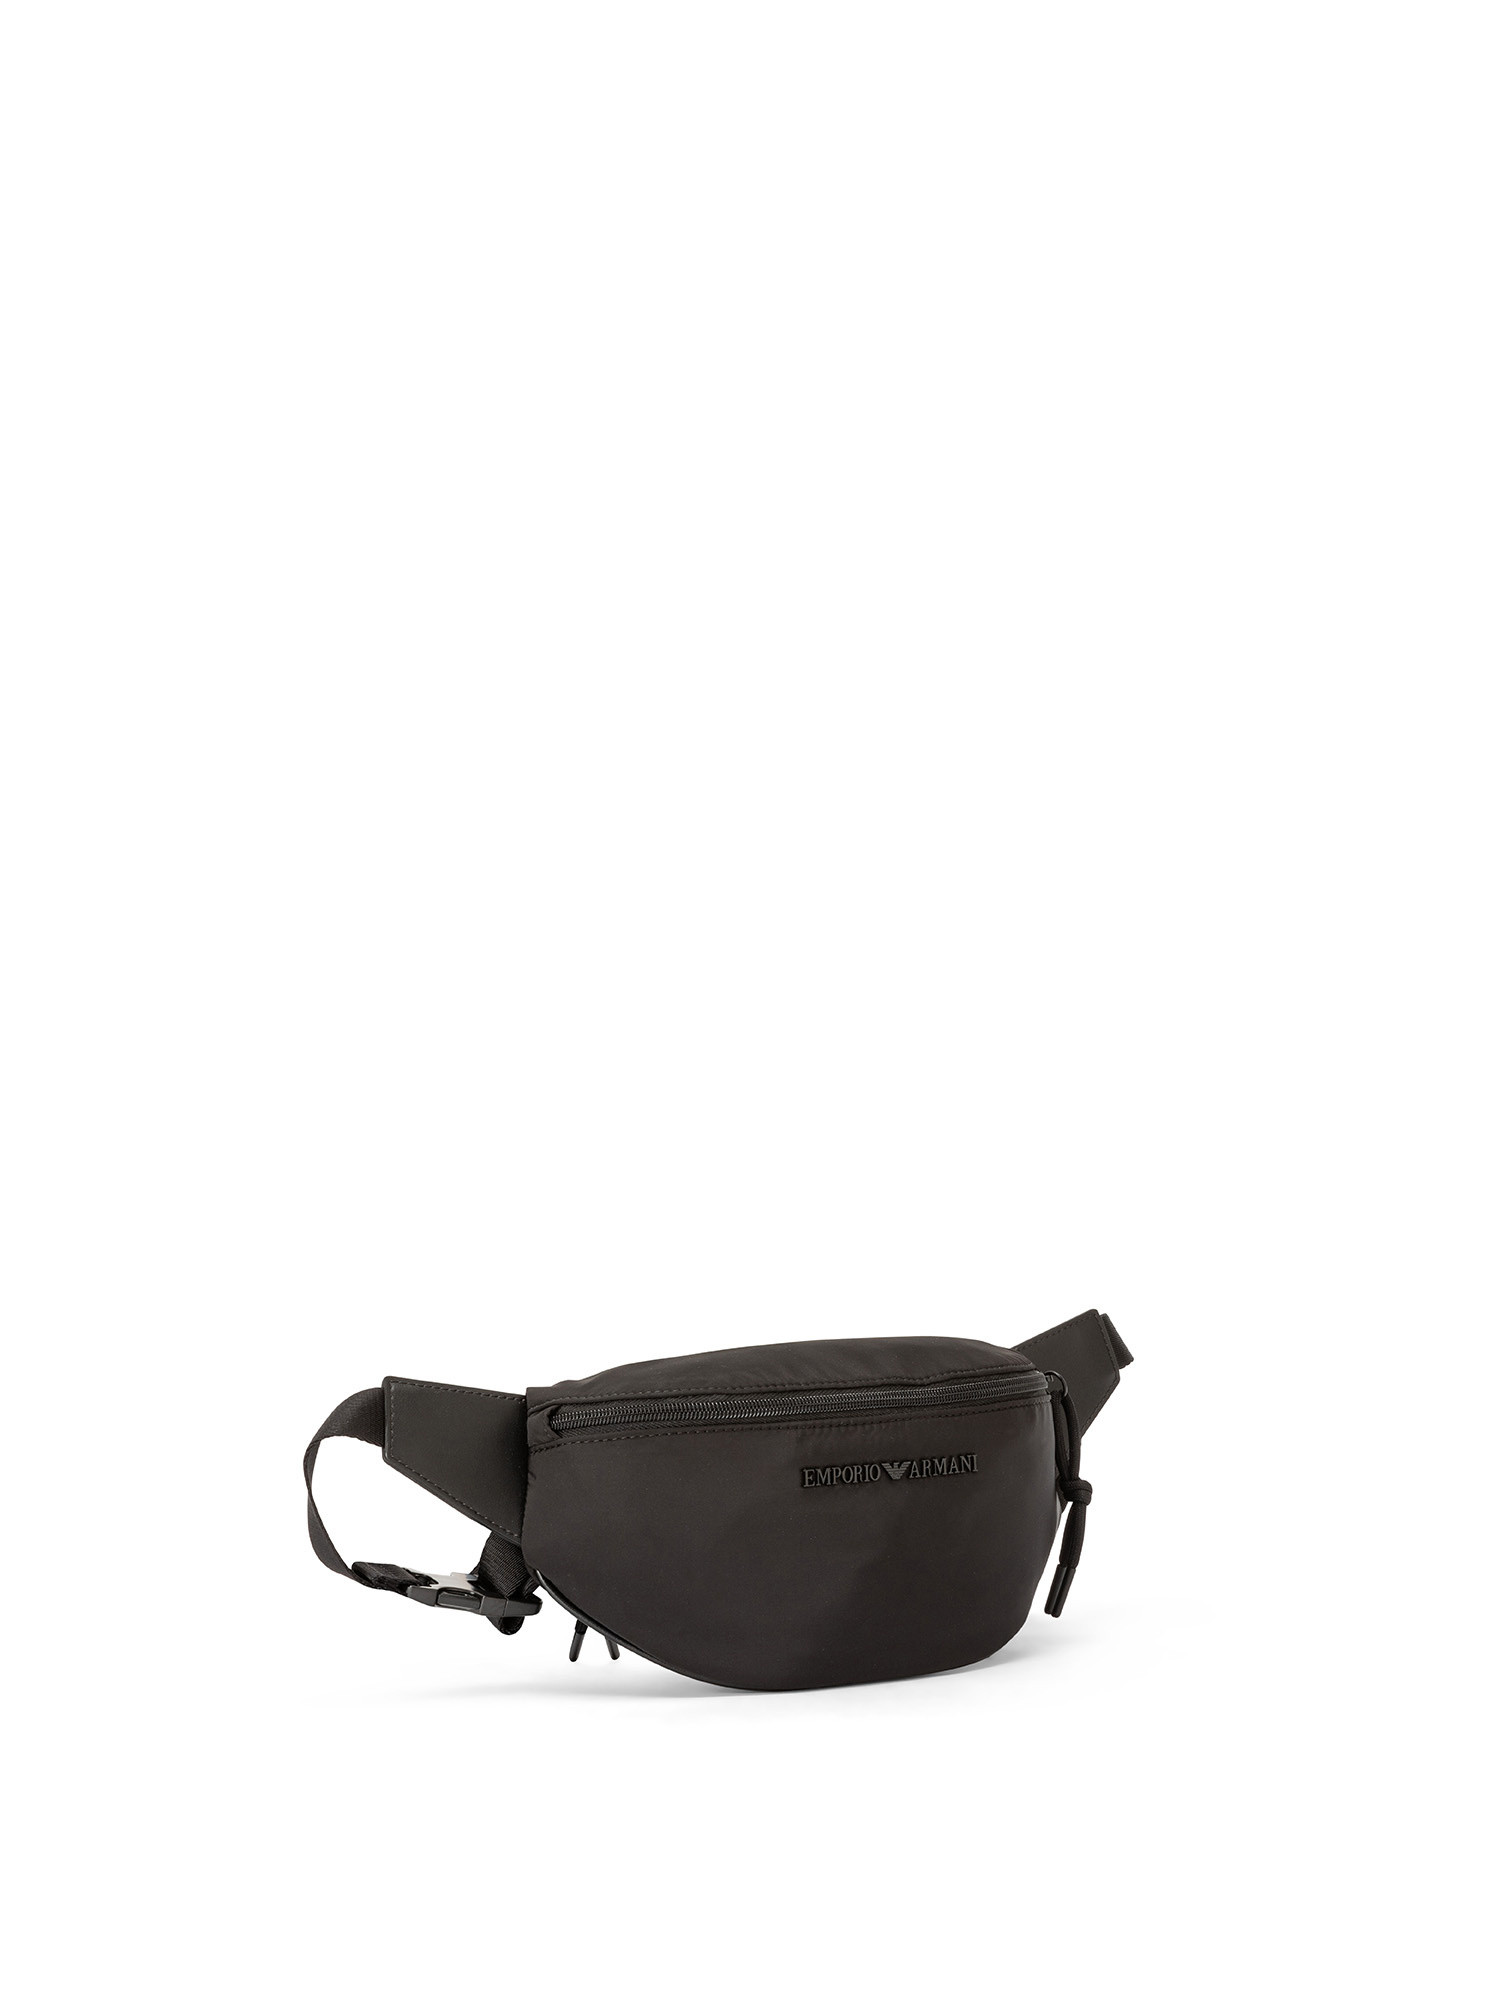 Emporio Armani -  Waist bag with logo, Black, large image number 0